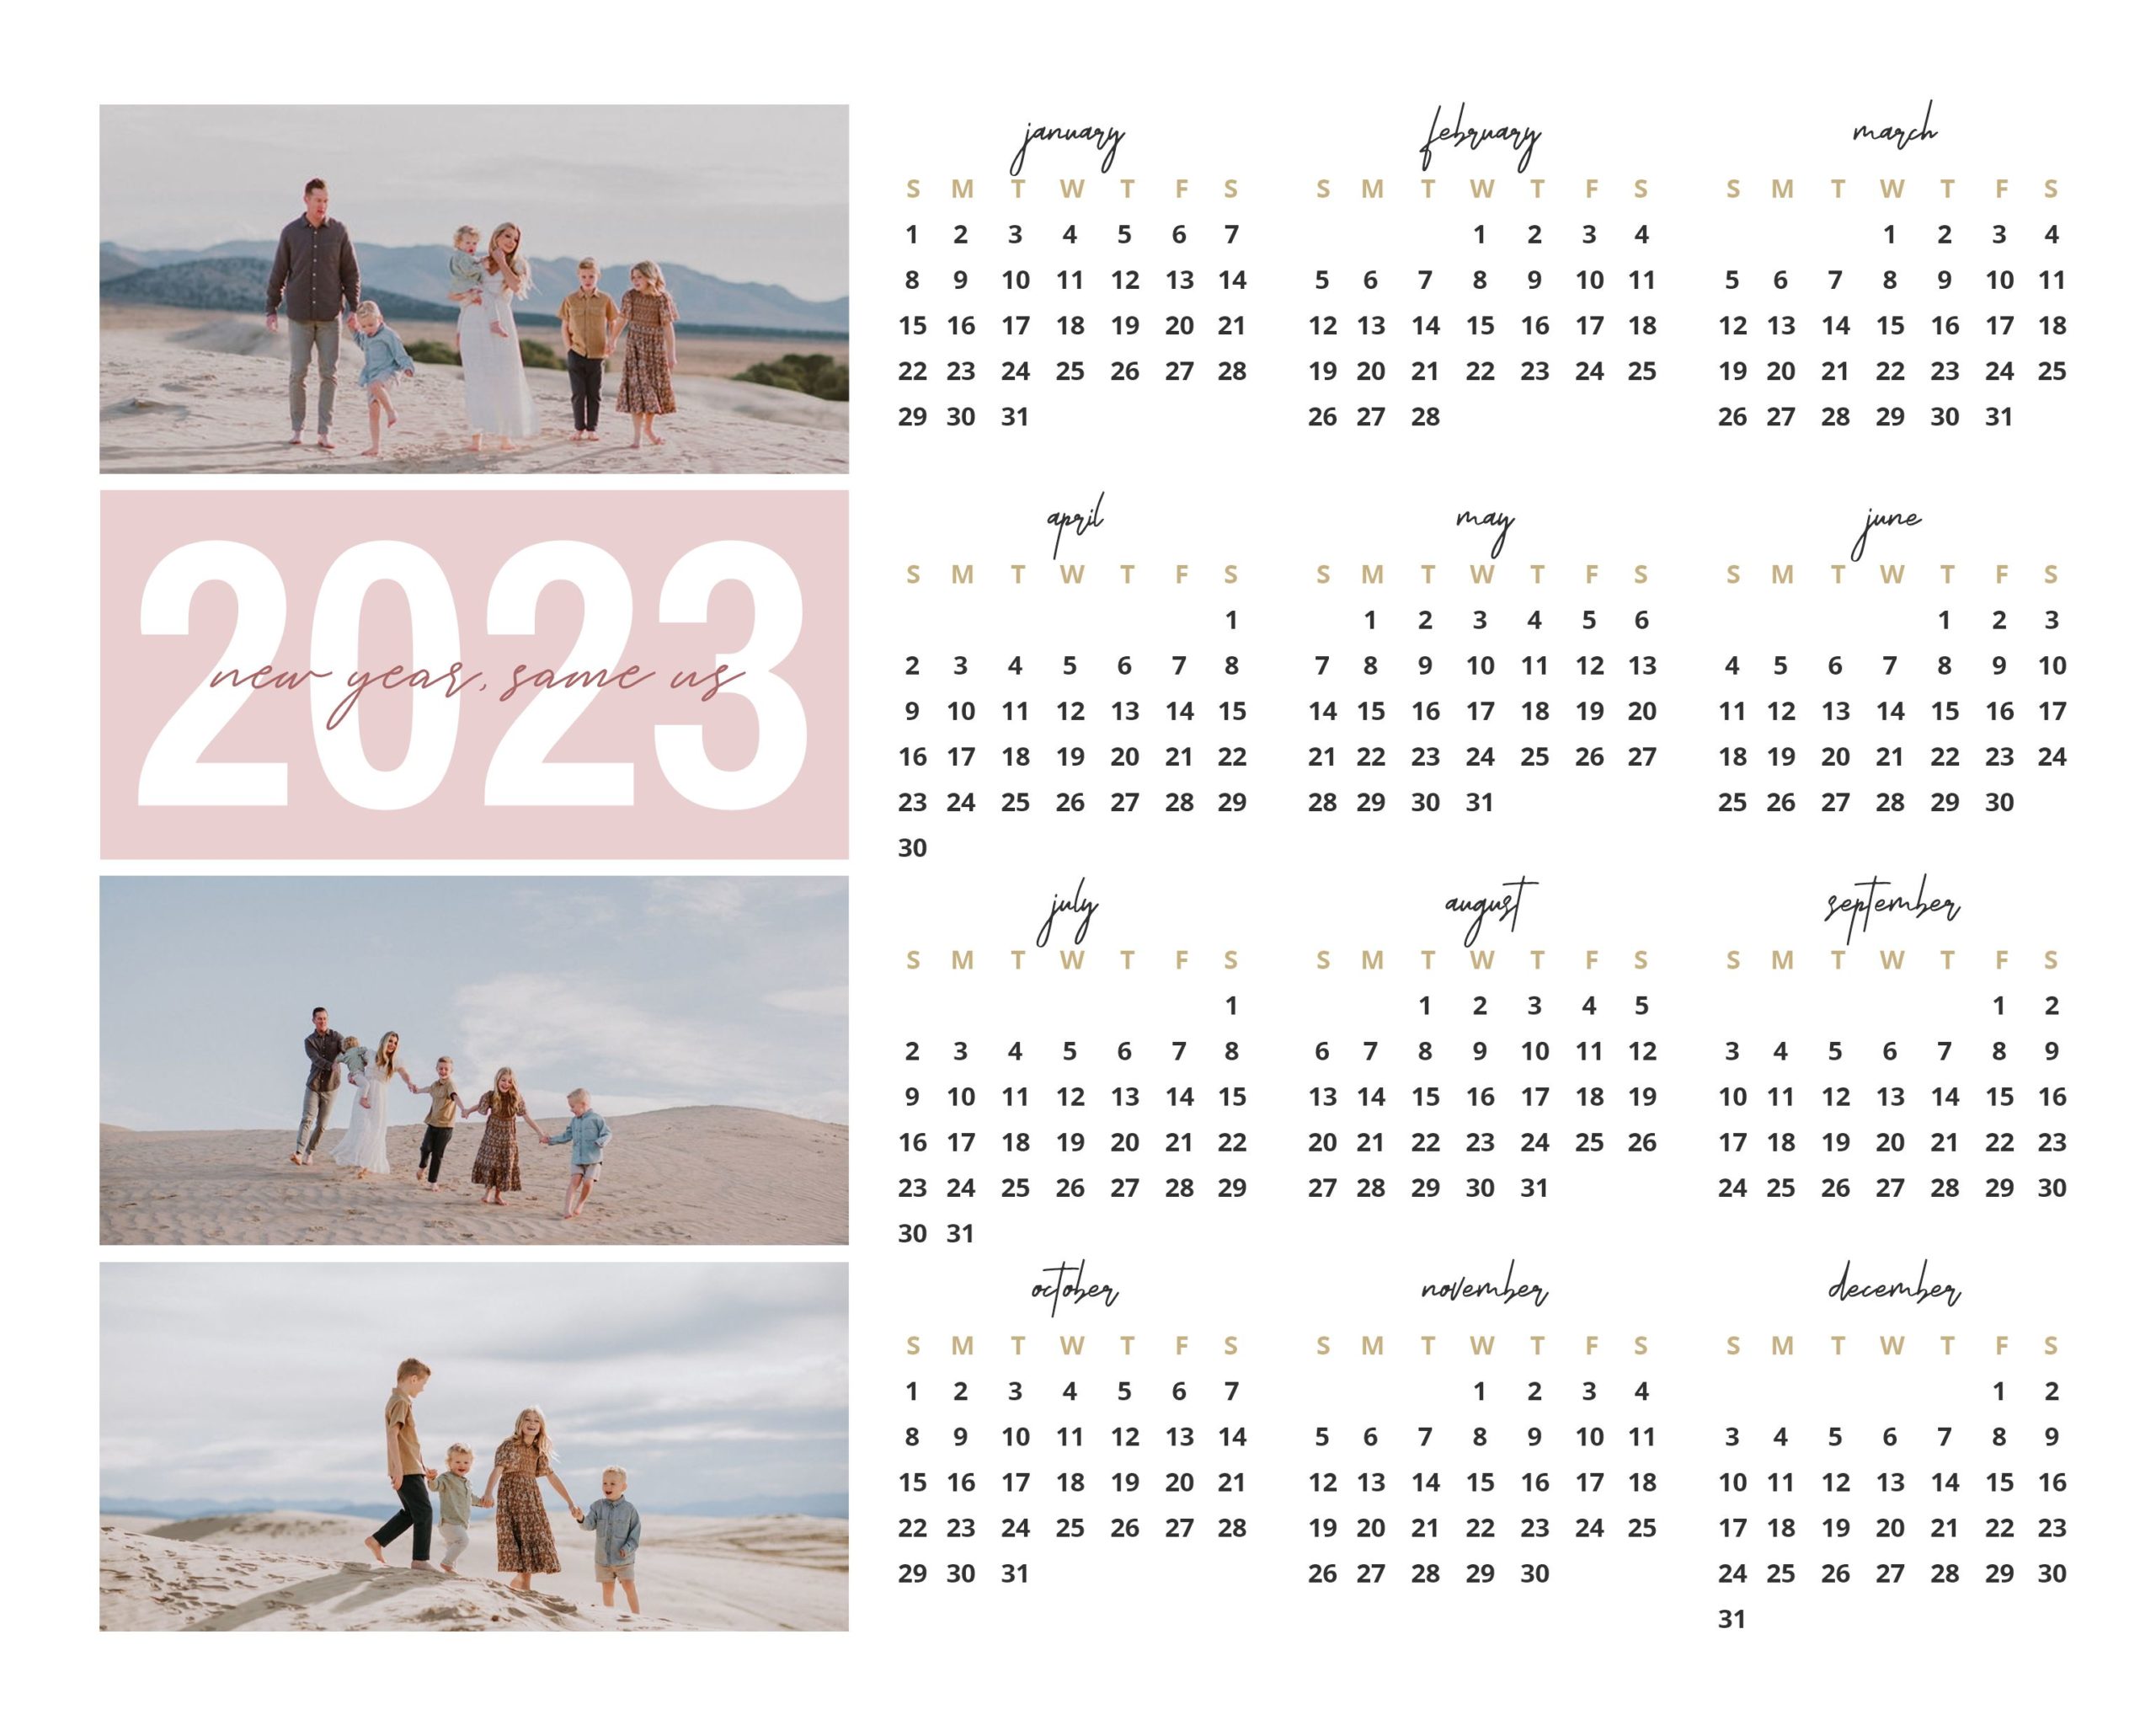 2023 business personalized photo calendar